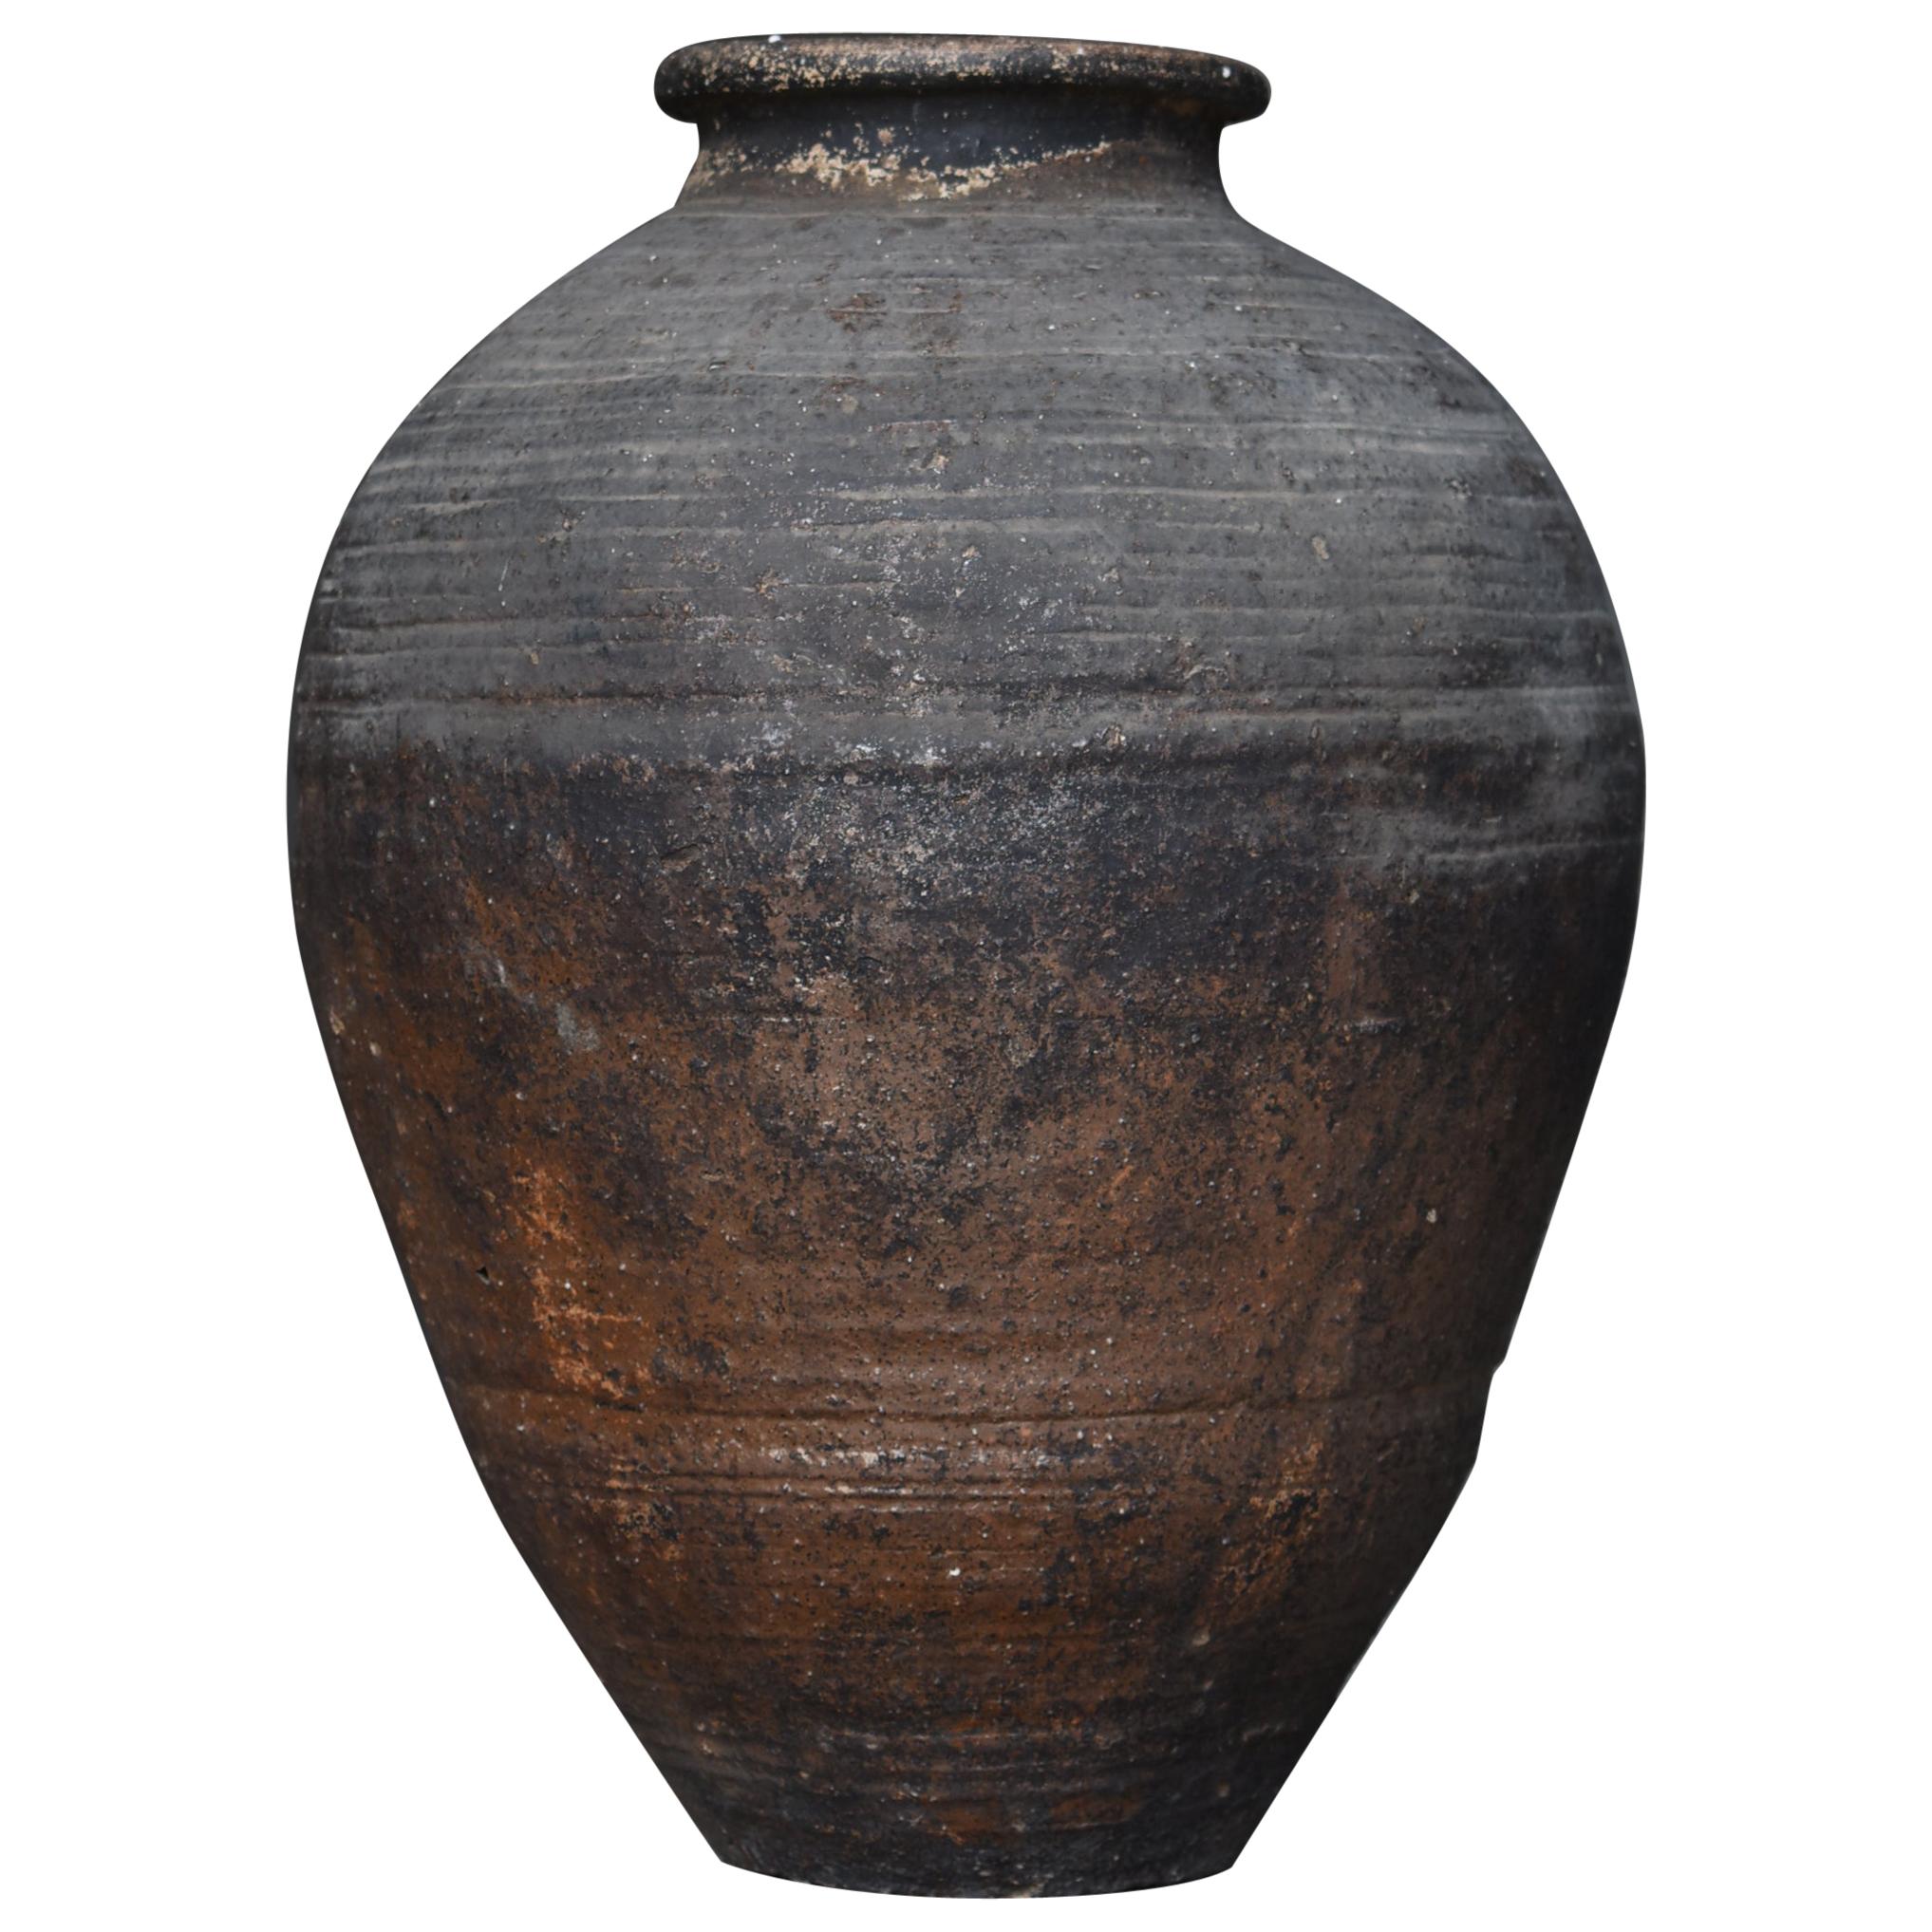 Japanese Old Pottery Edo Period 1800s-1900s/Antique Vessel Ceramic Flower Vase